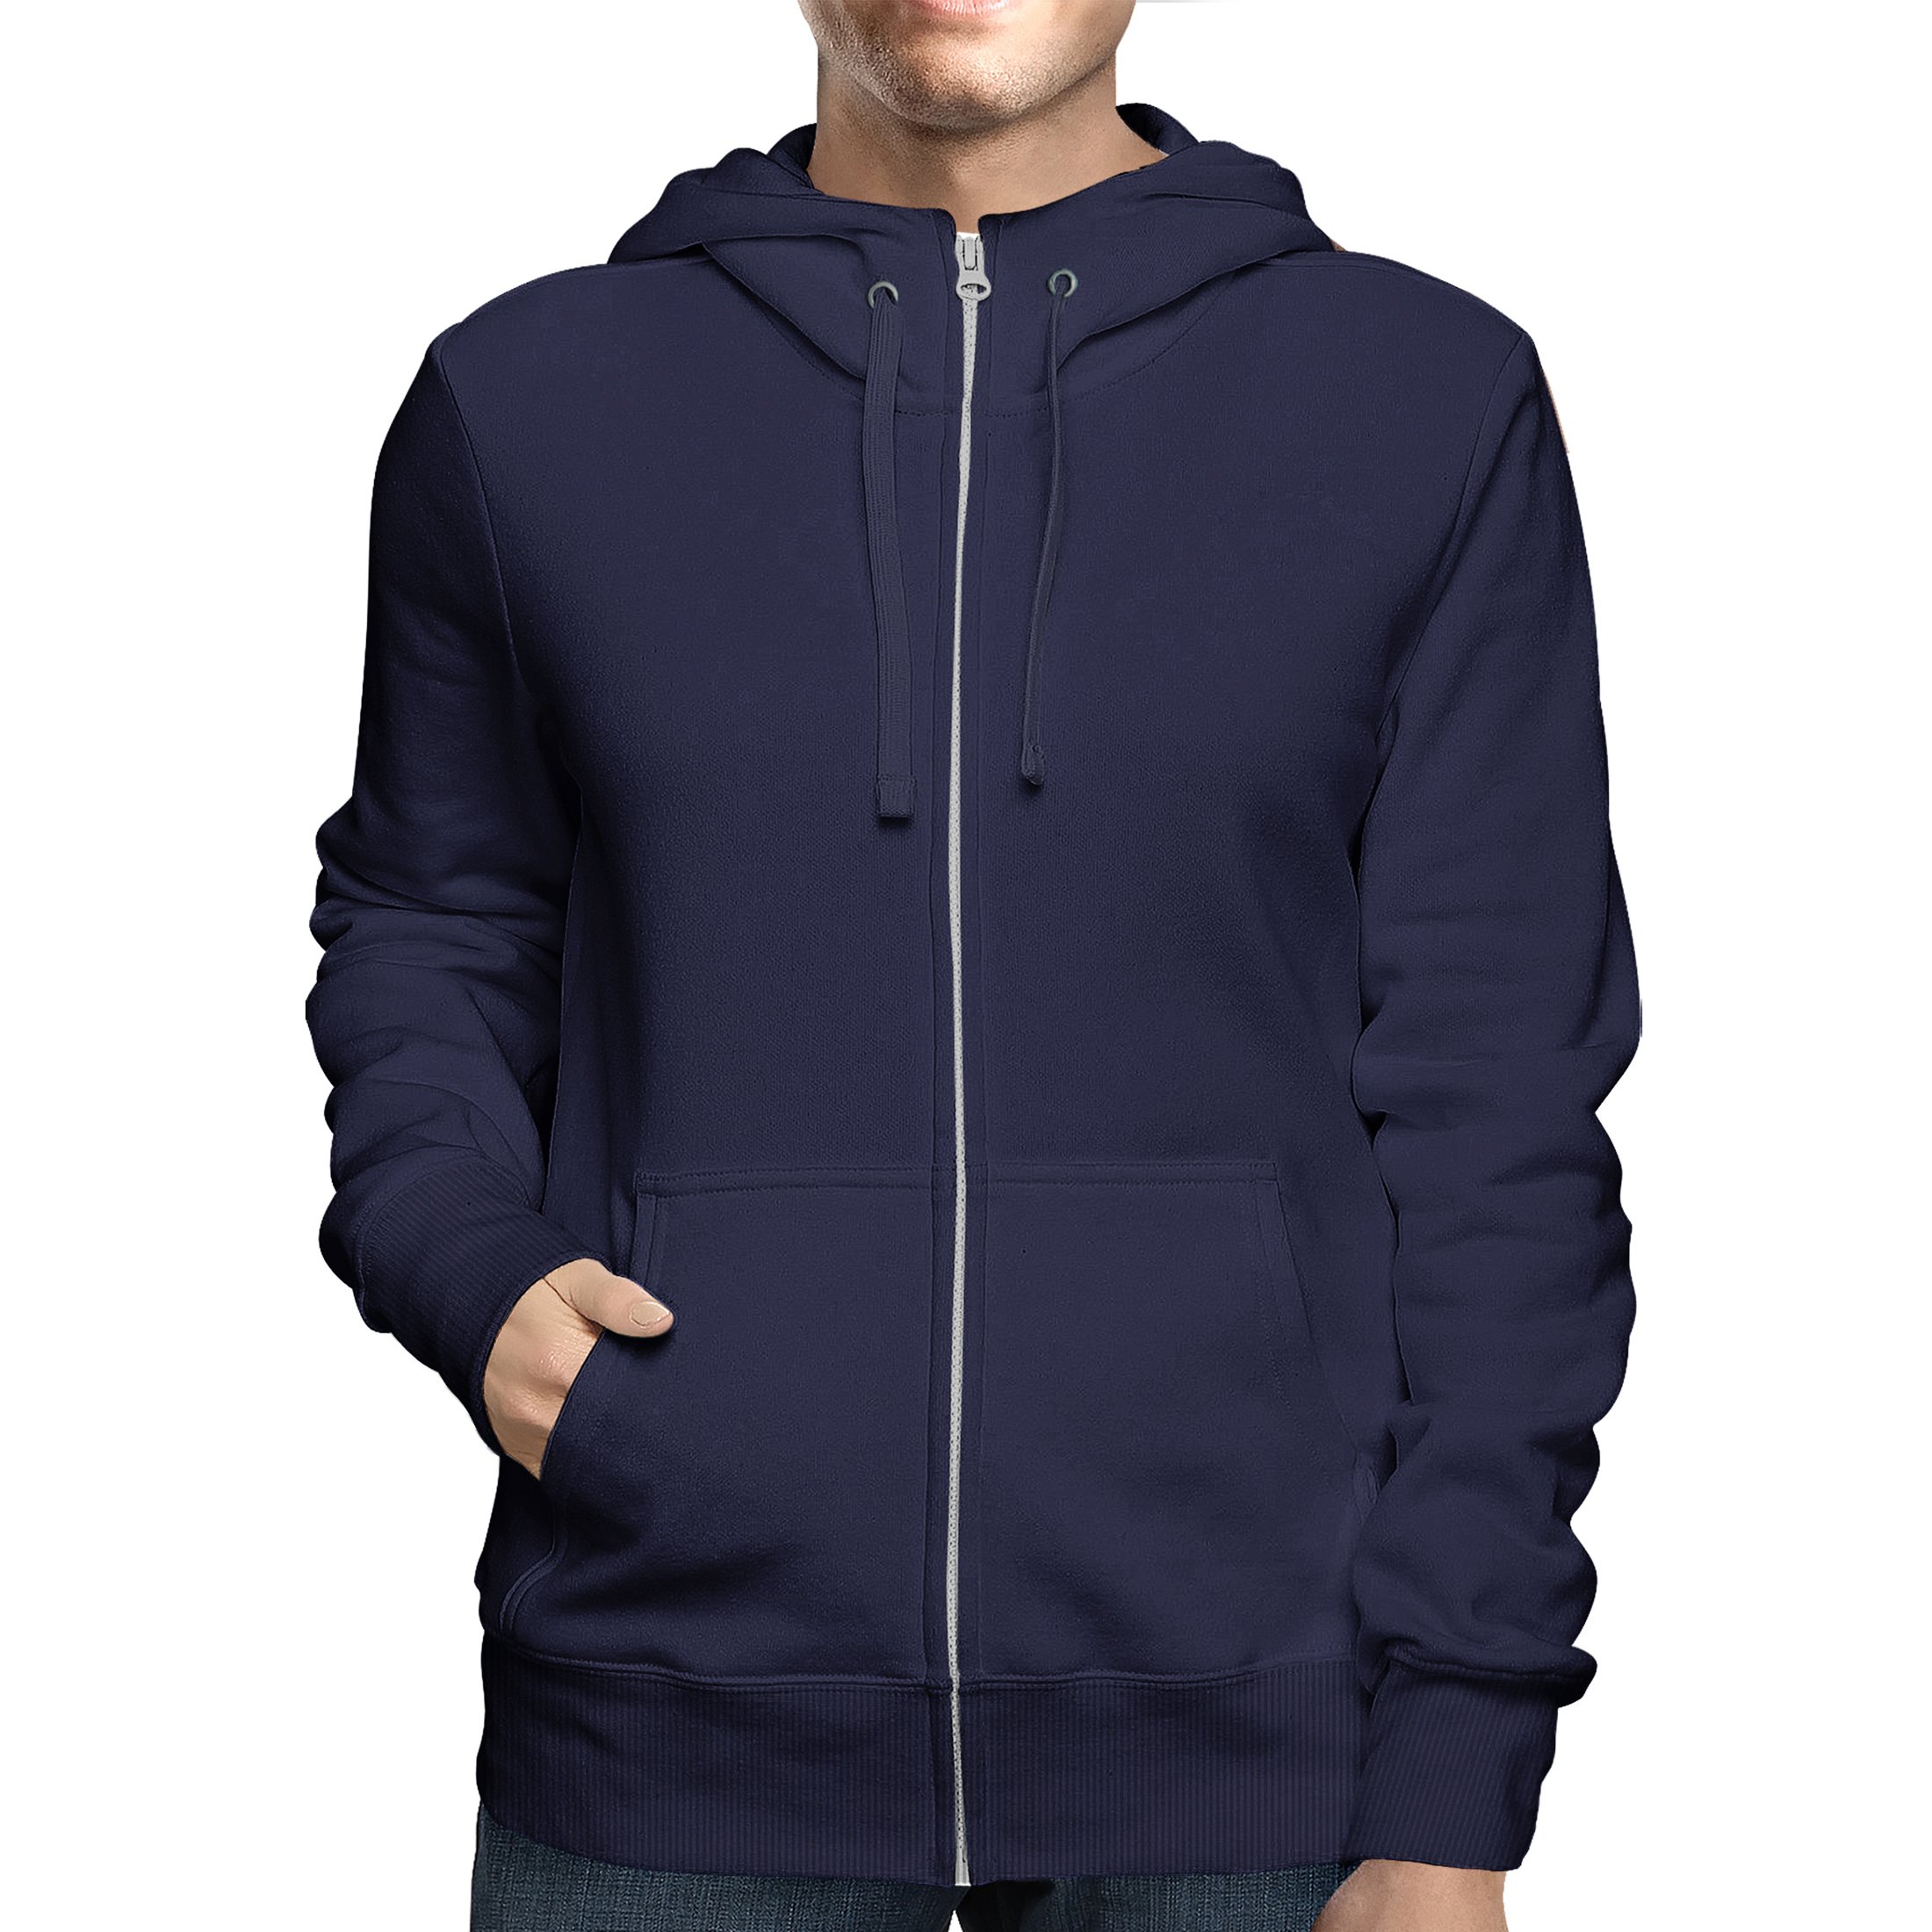 2-Pack: Men's Full Zip Up Fleece-Lined Hoodie Sweatshirt (Big & Tall Size Available) - Navy, Medium